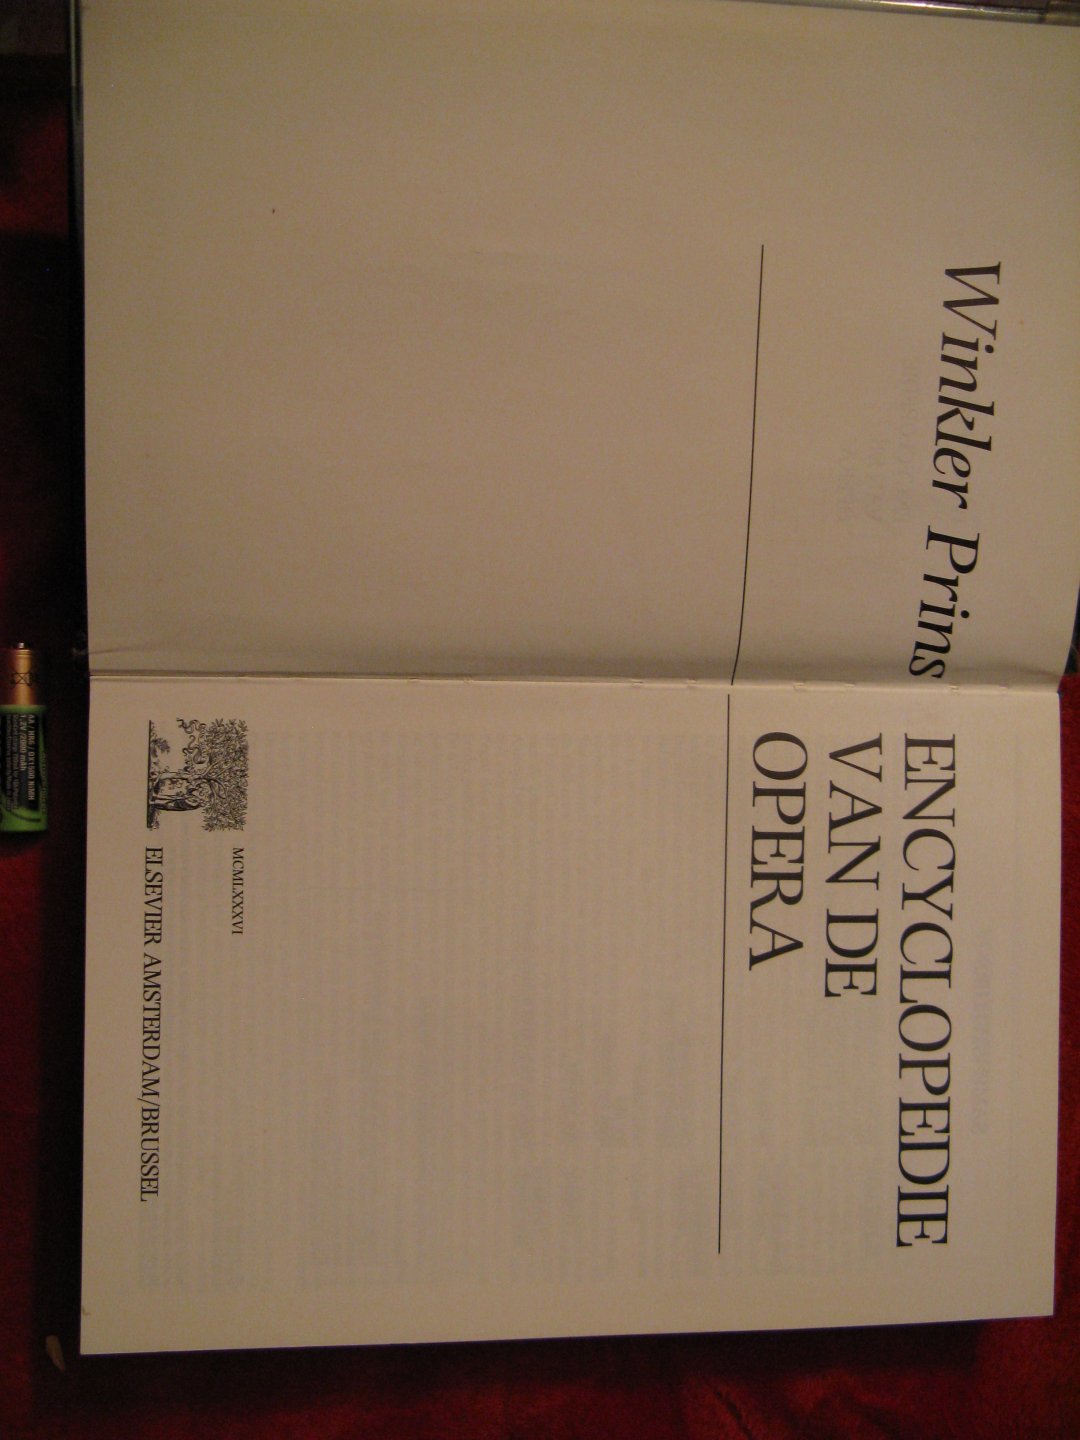 Korenhof - Winkler prins encyclopedie v.d. opera / druk 1